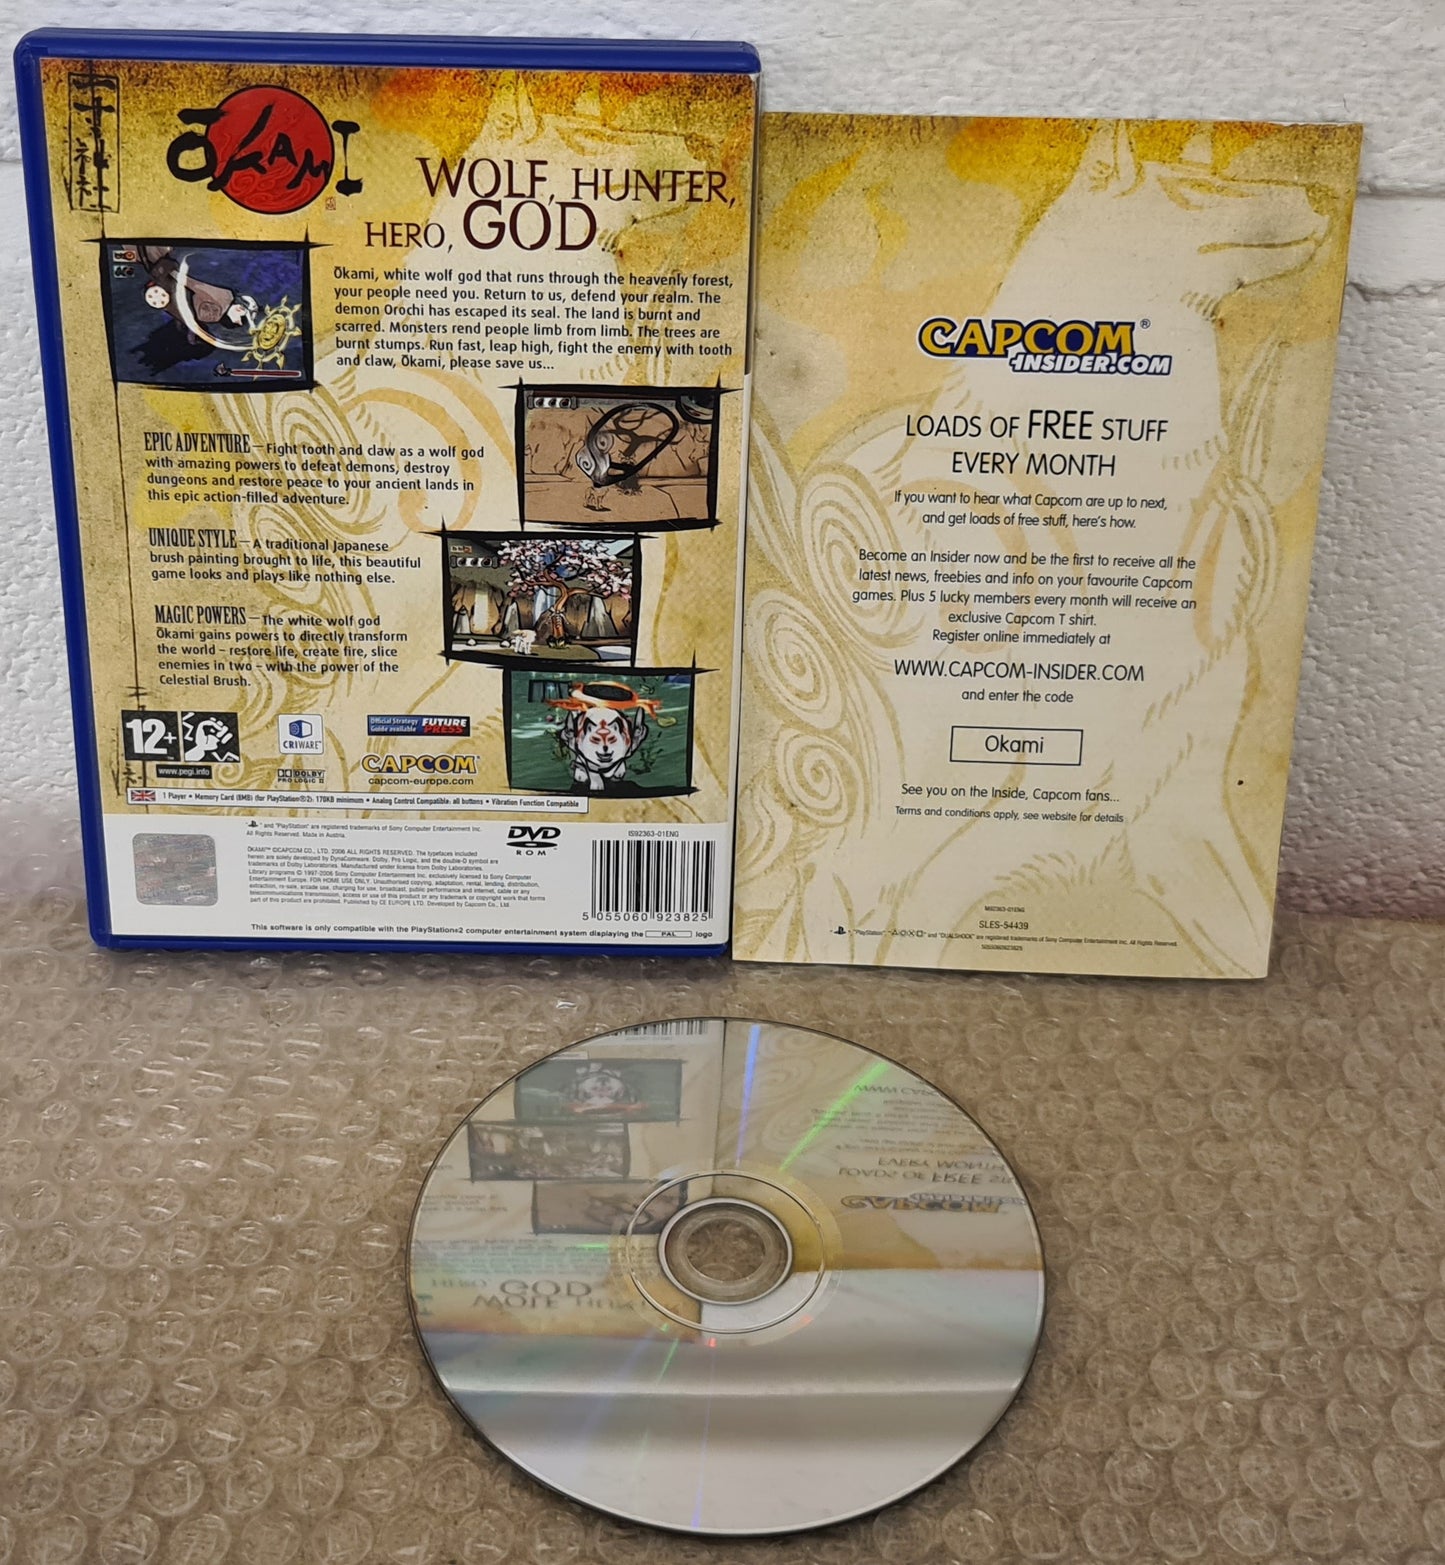 Okami Sony Playstation 2 (PS2) Game